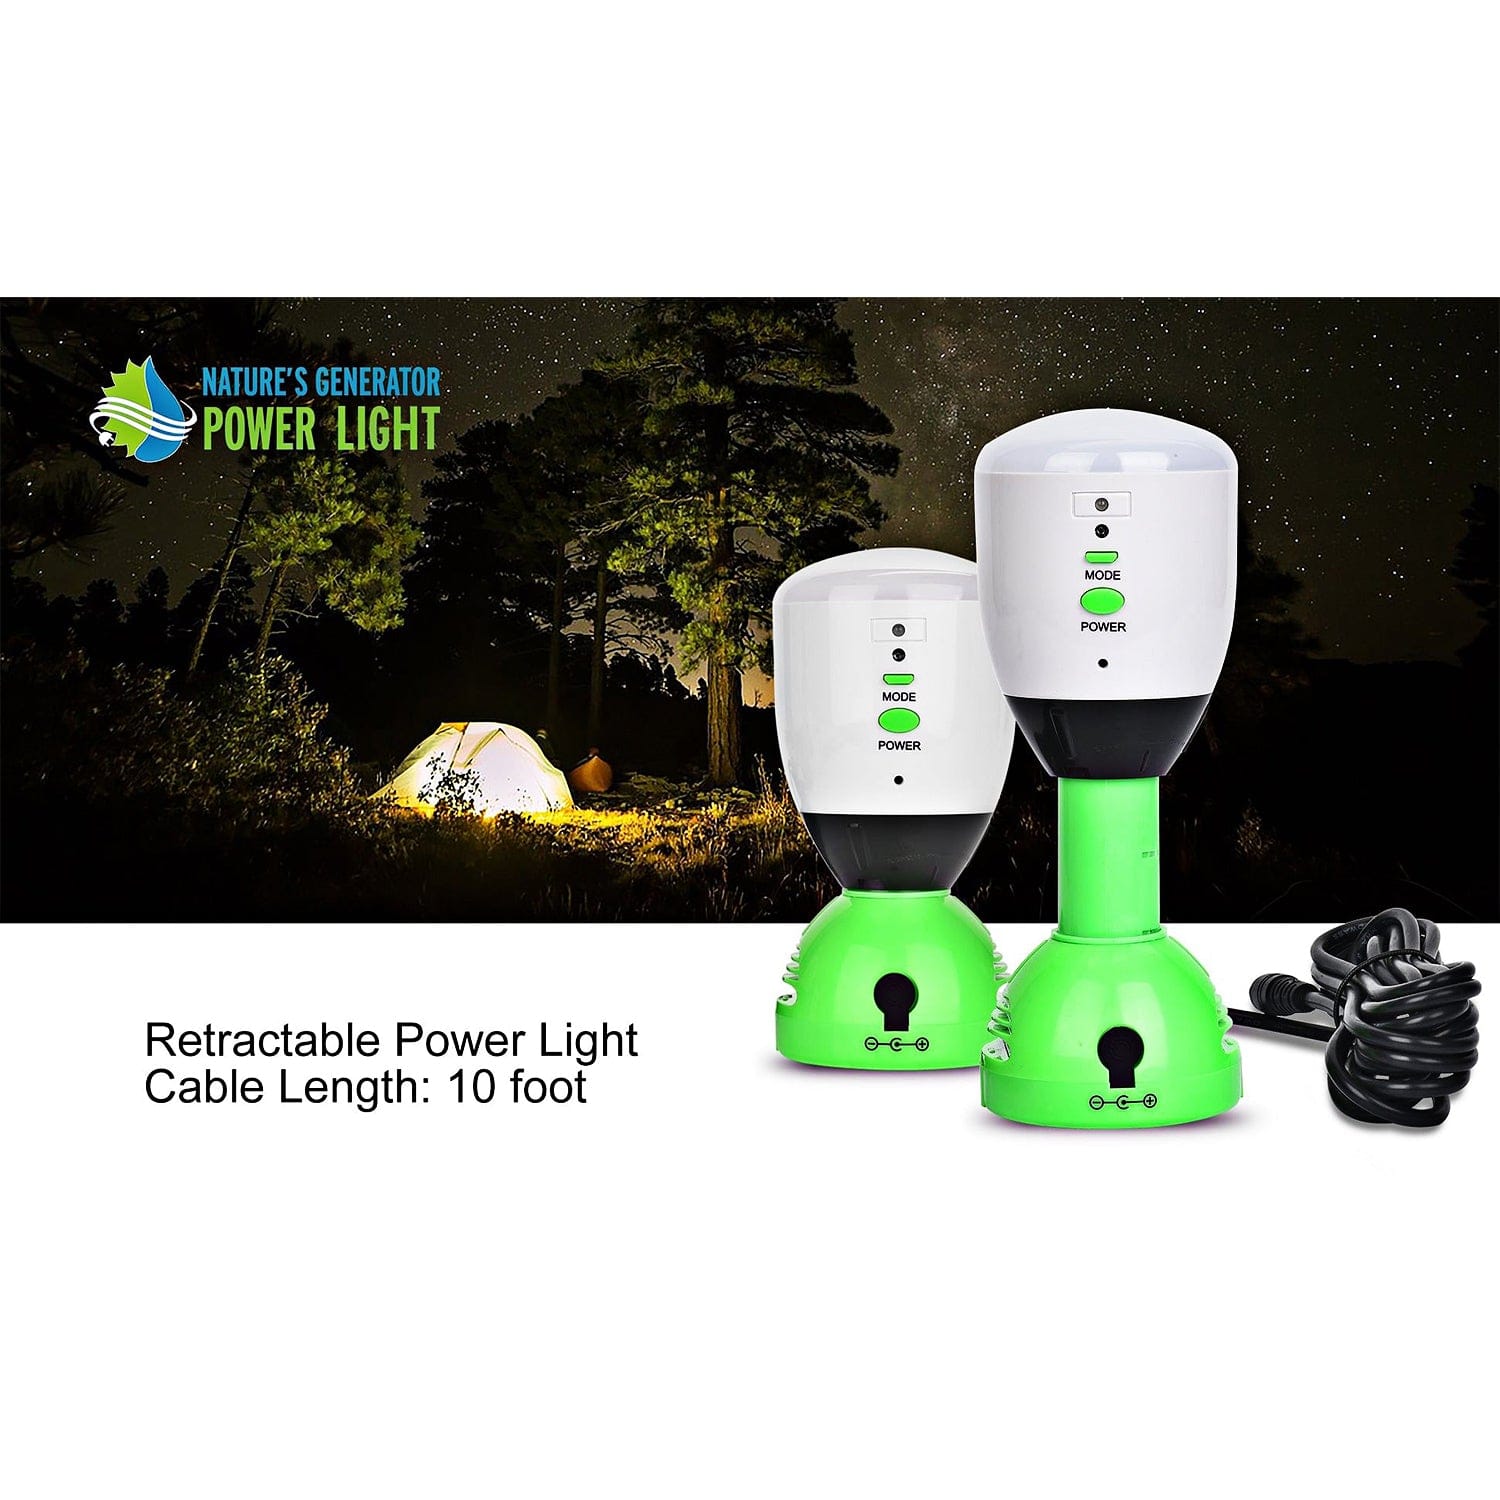 Nature's Generator Power Light Lifestyle Image